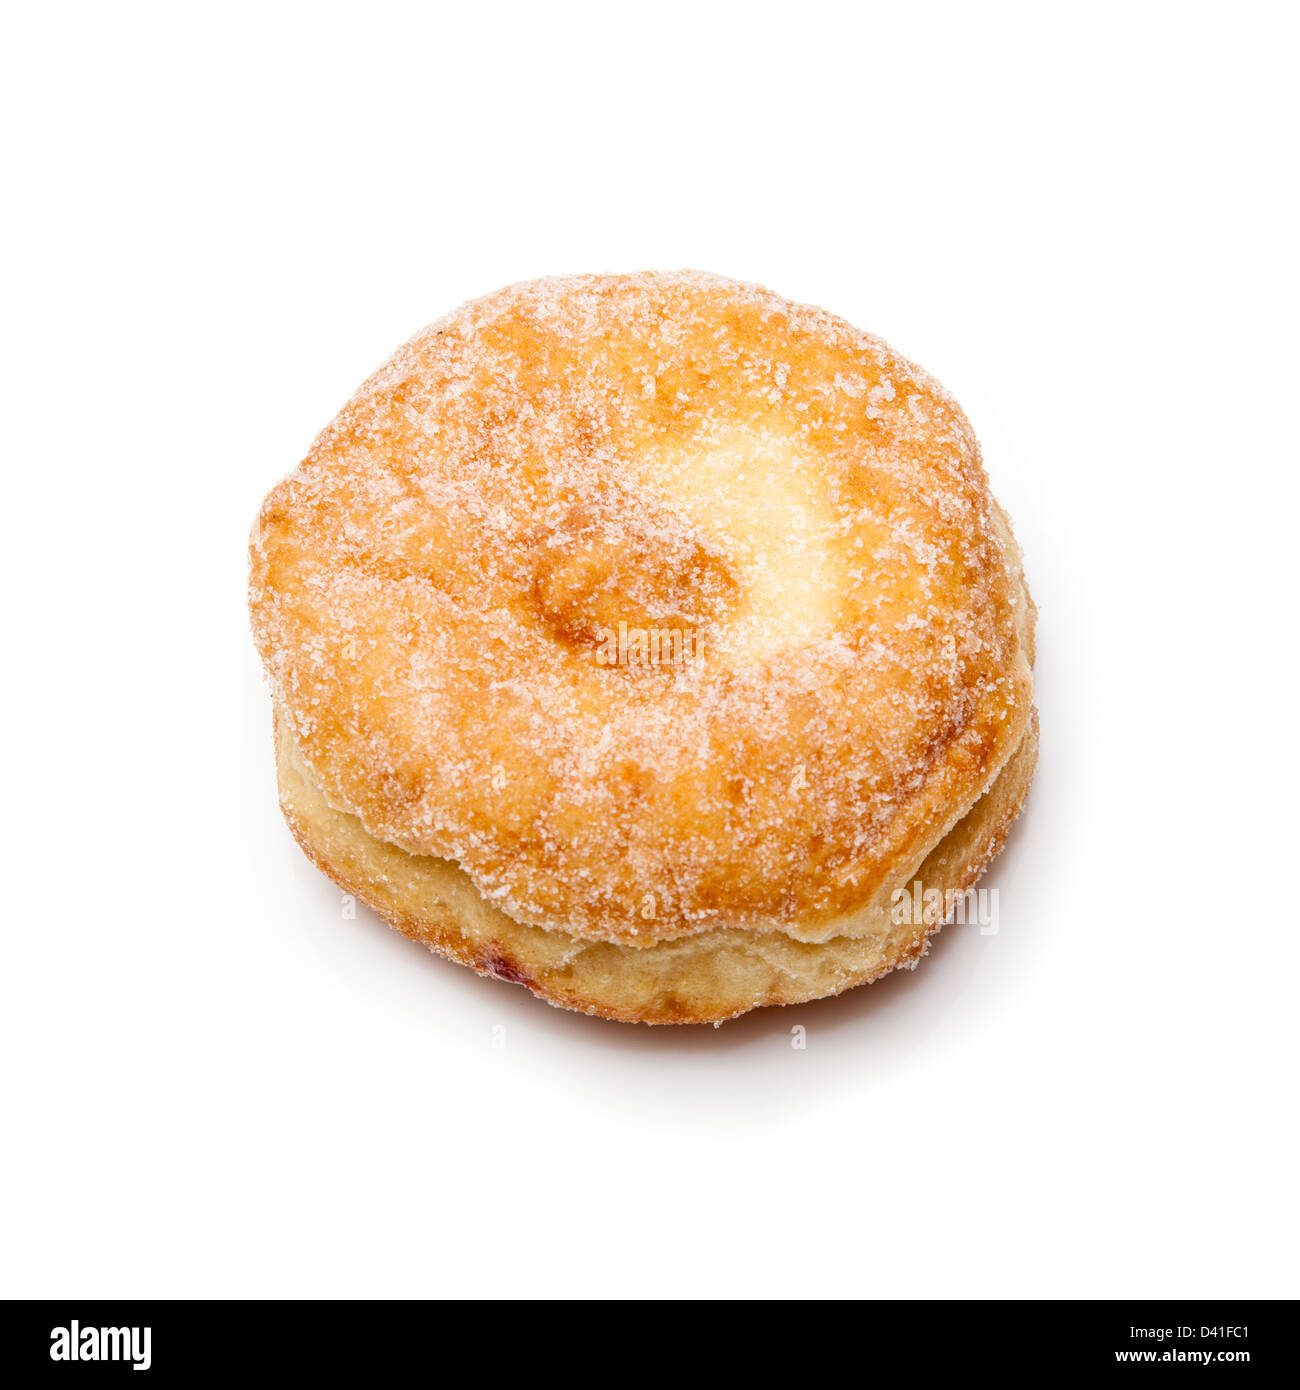 Jam donut isolated on a white studio background. Stock Photo